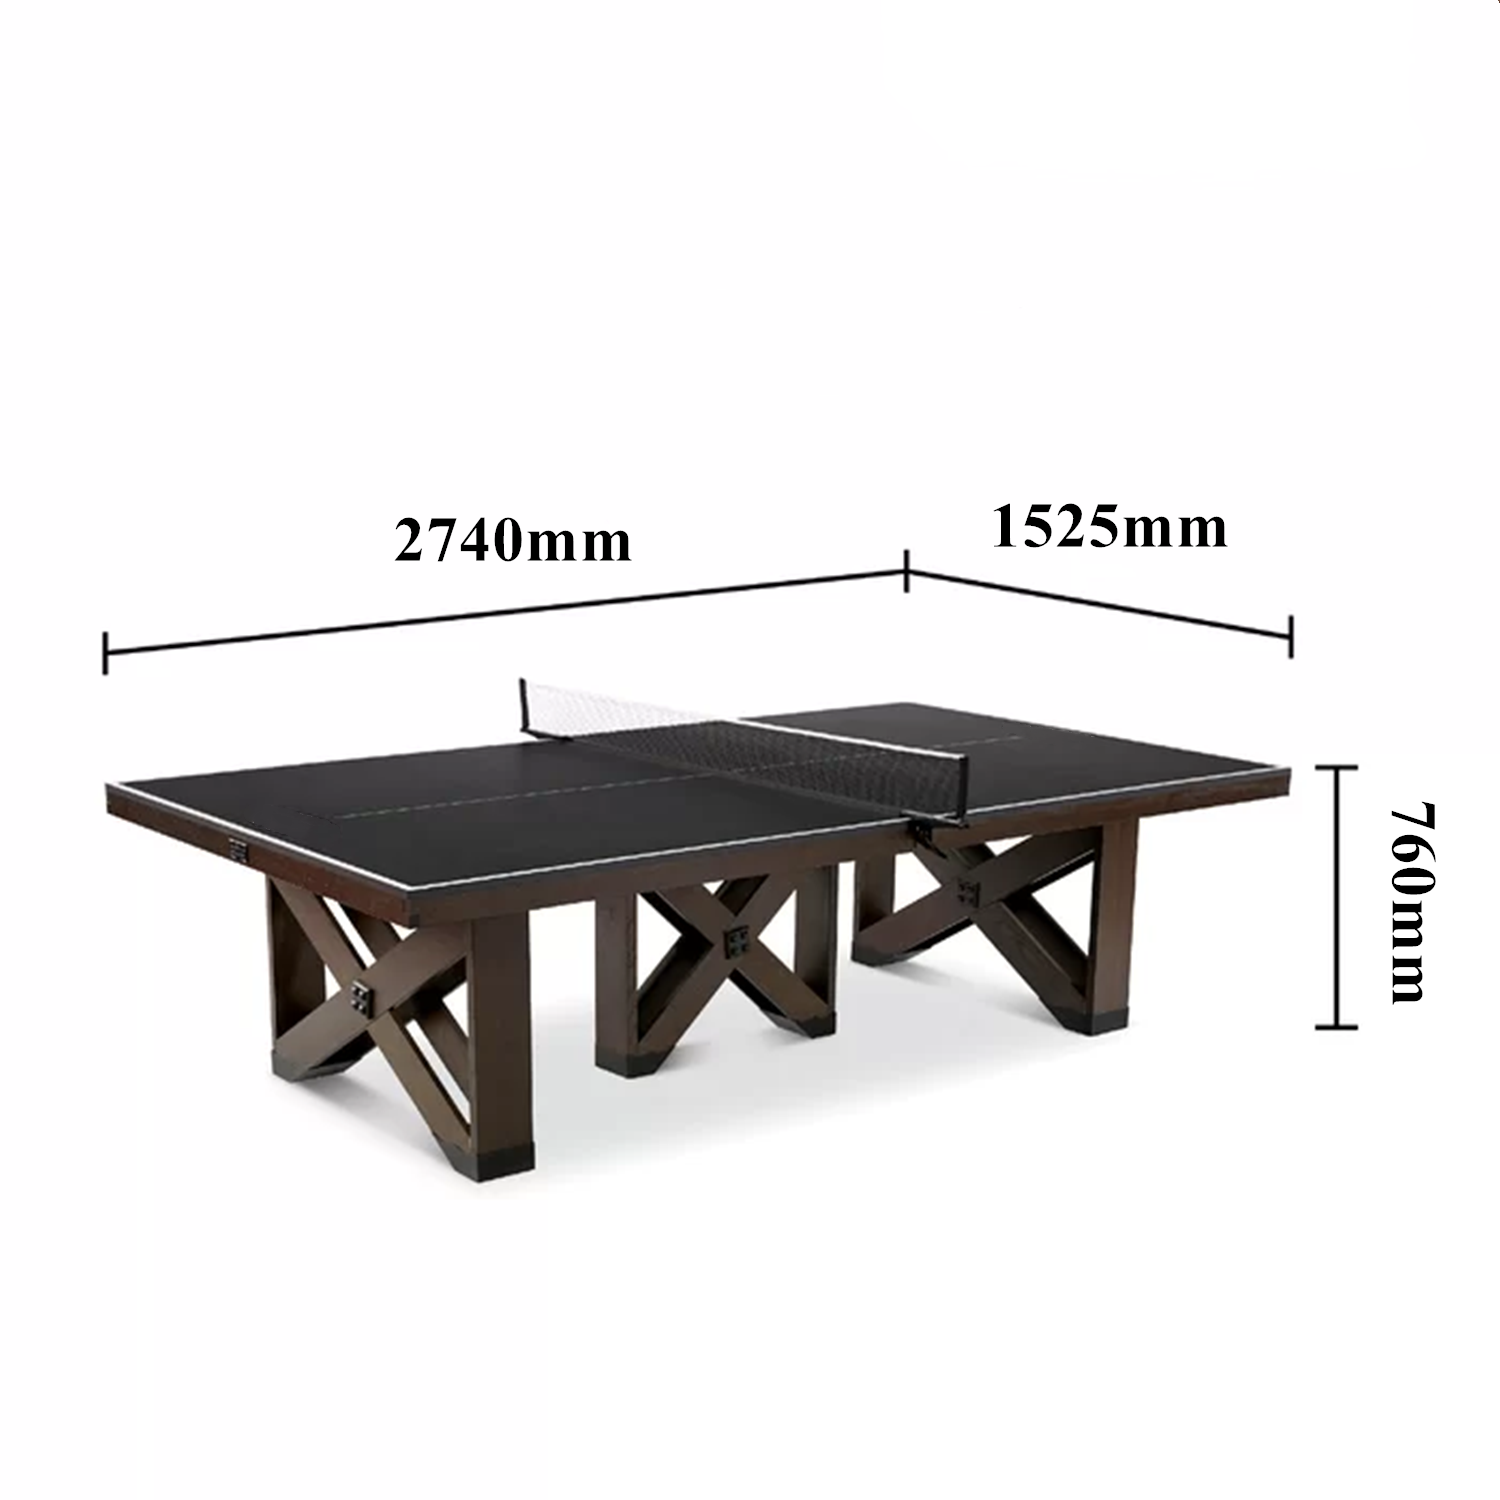 19mm Hillsboro Table Tennis Table